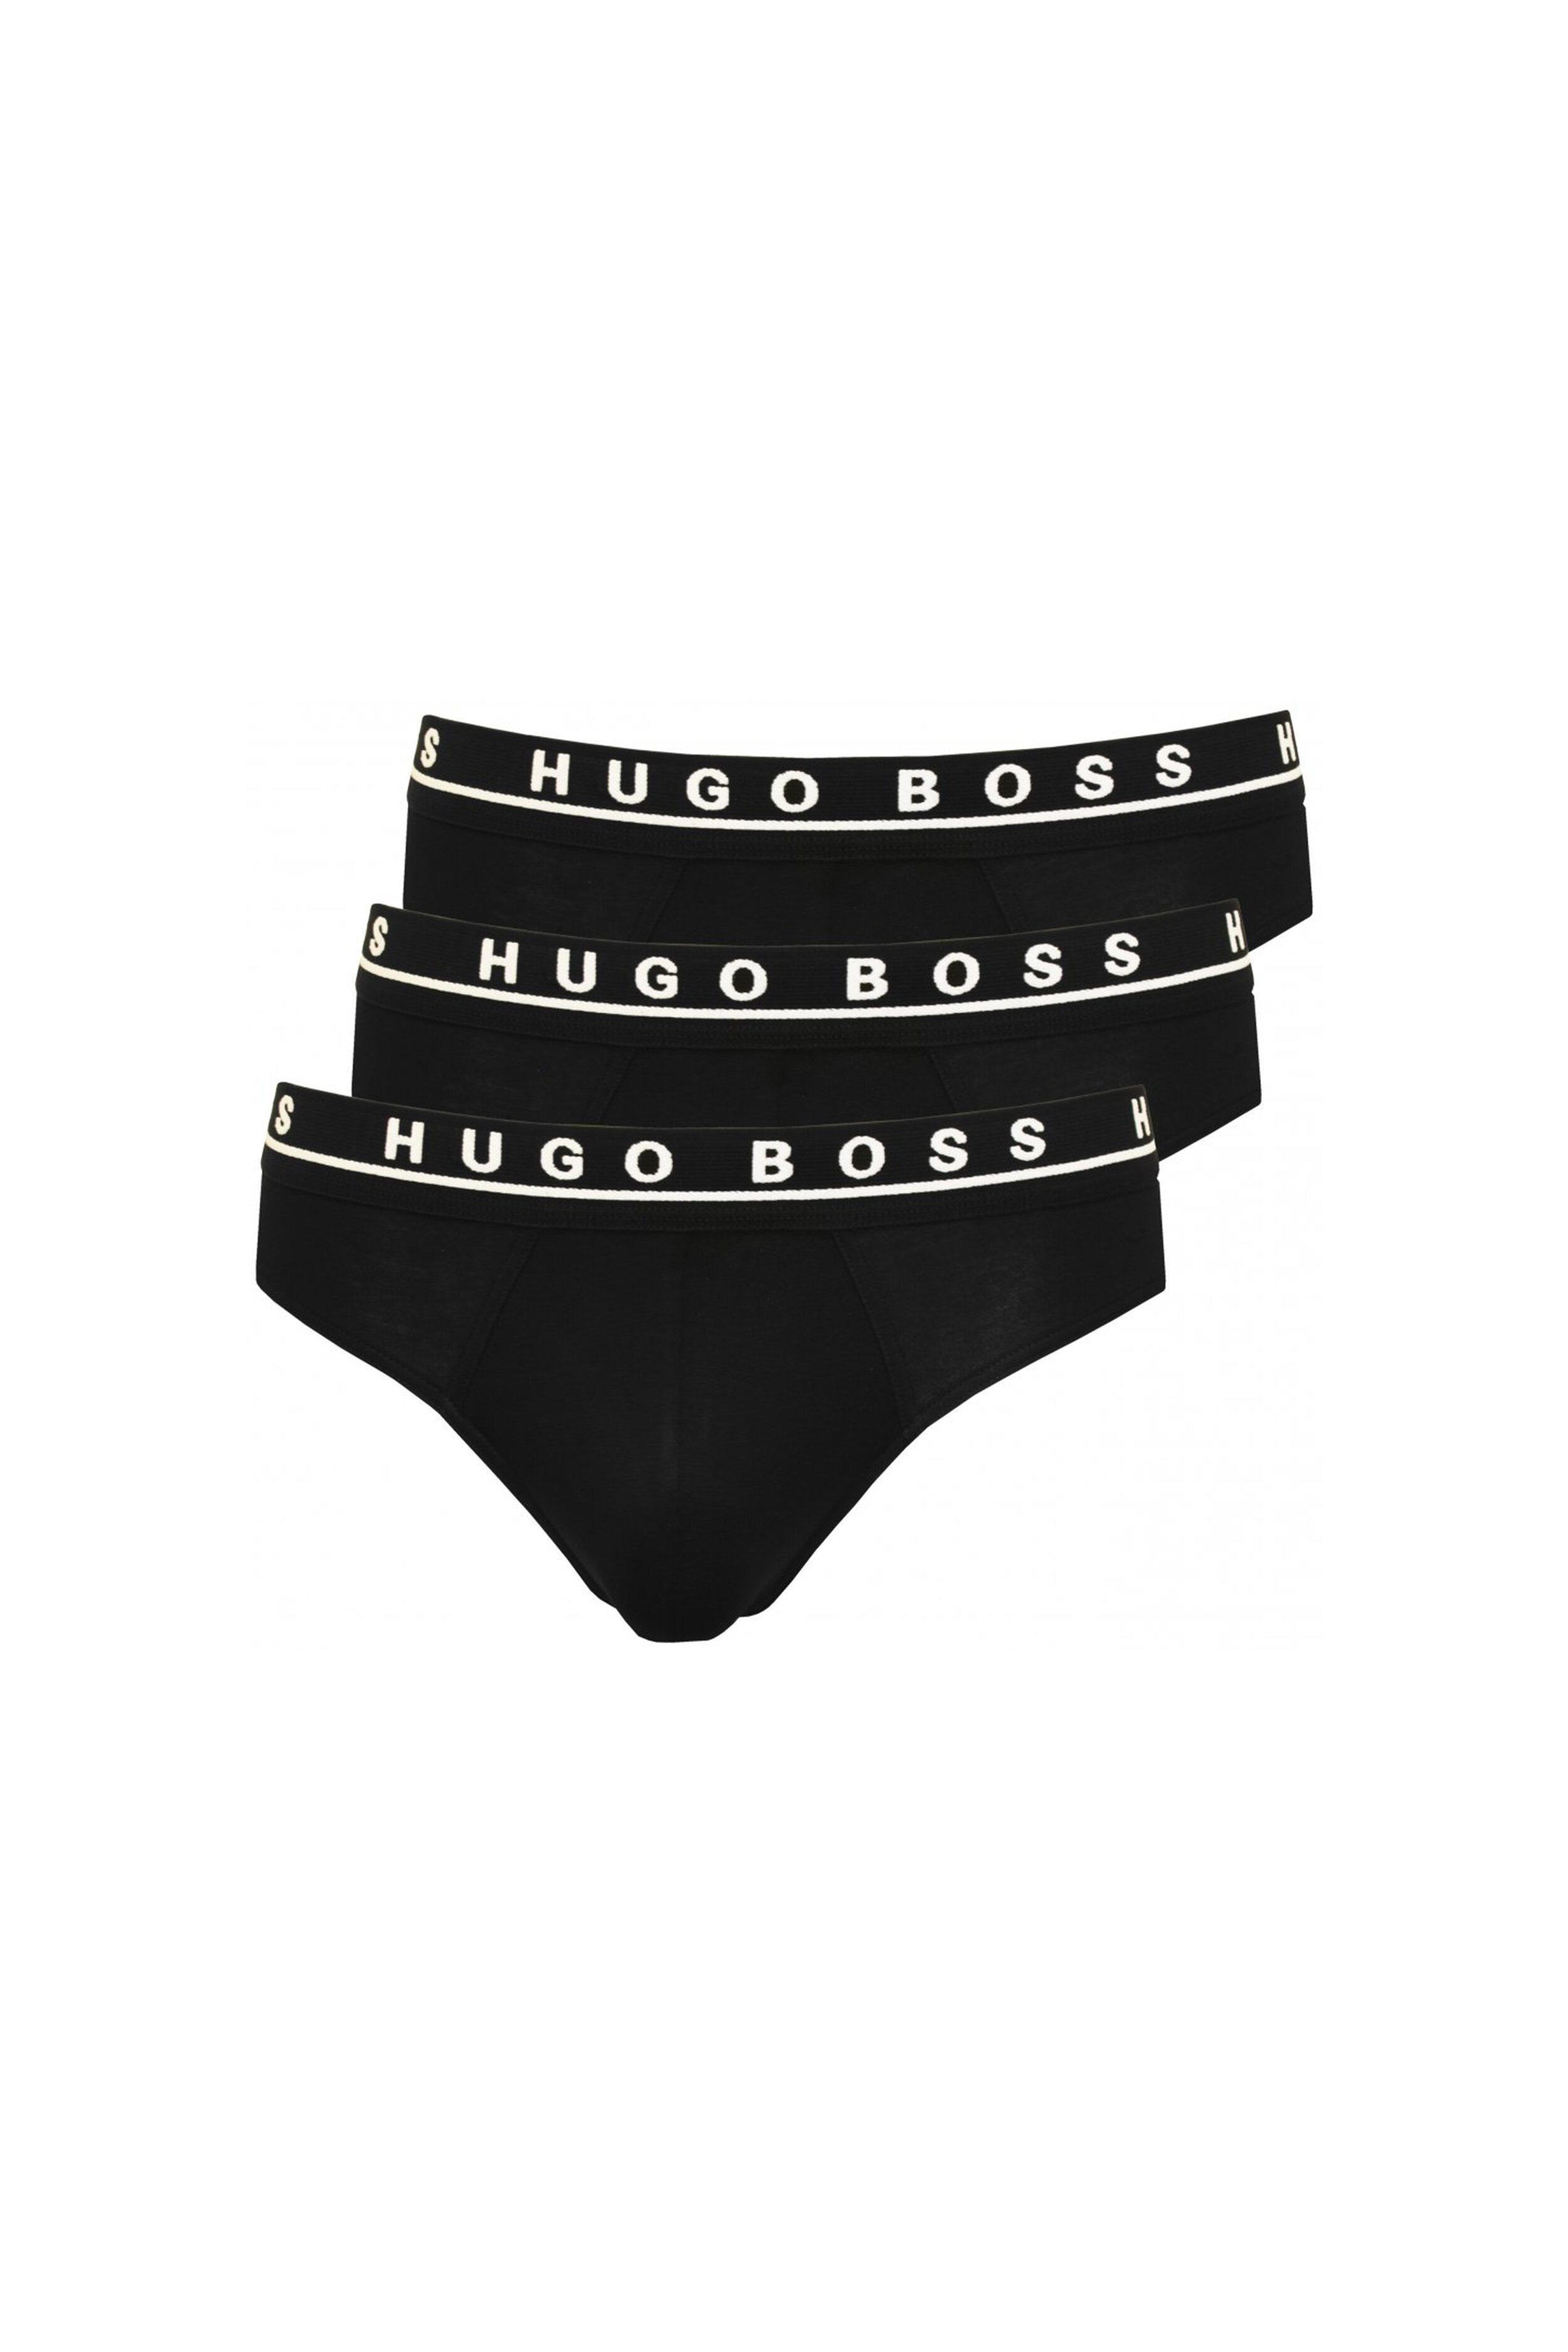 Hugo Boss LeatherDocument Bag — Man to Man